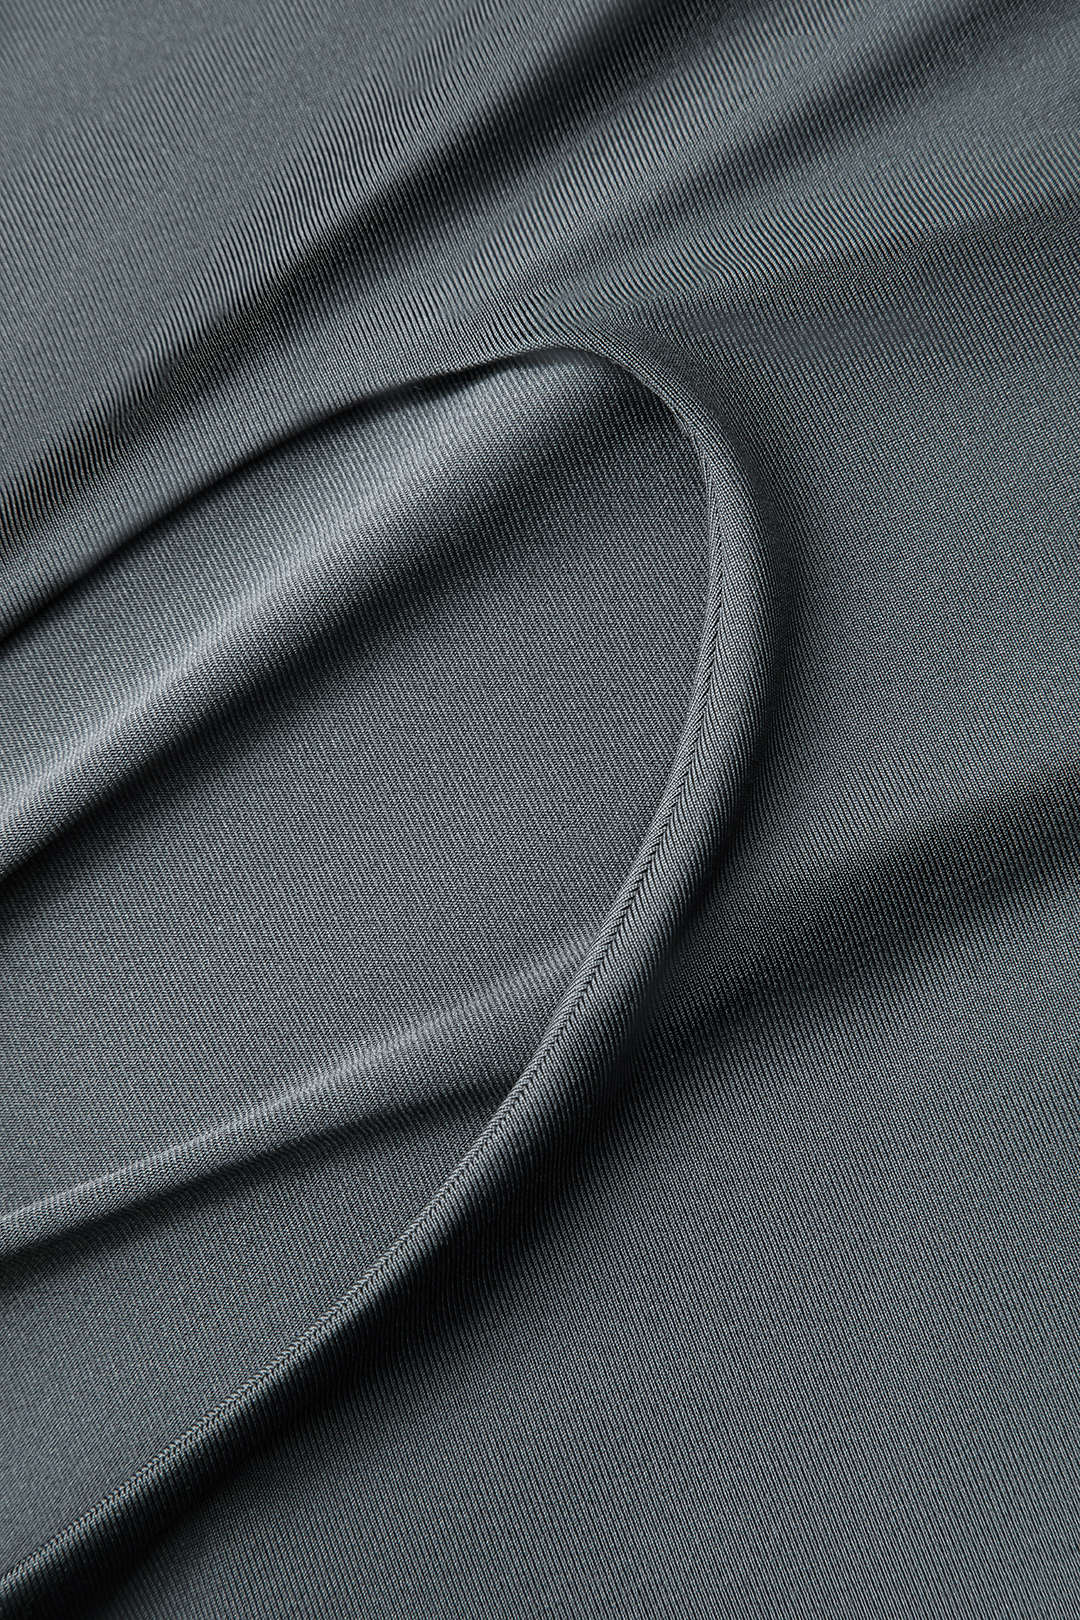 Asymmetrical Cut Out Long Sleeve Crop Top